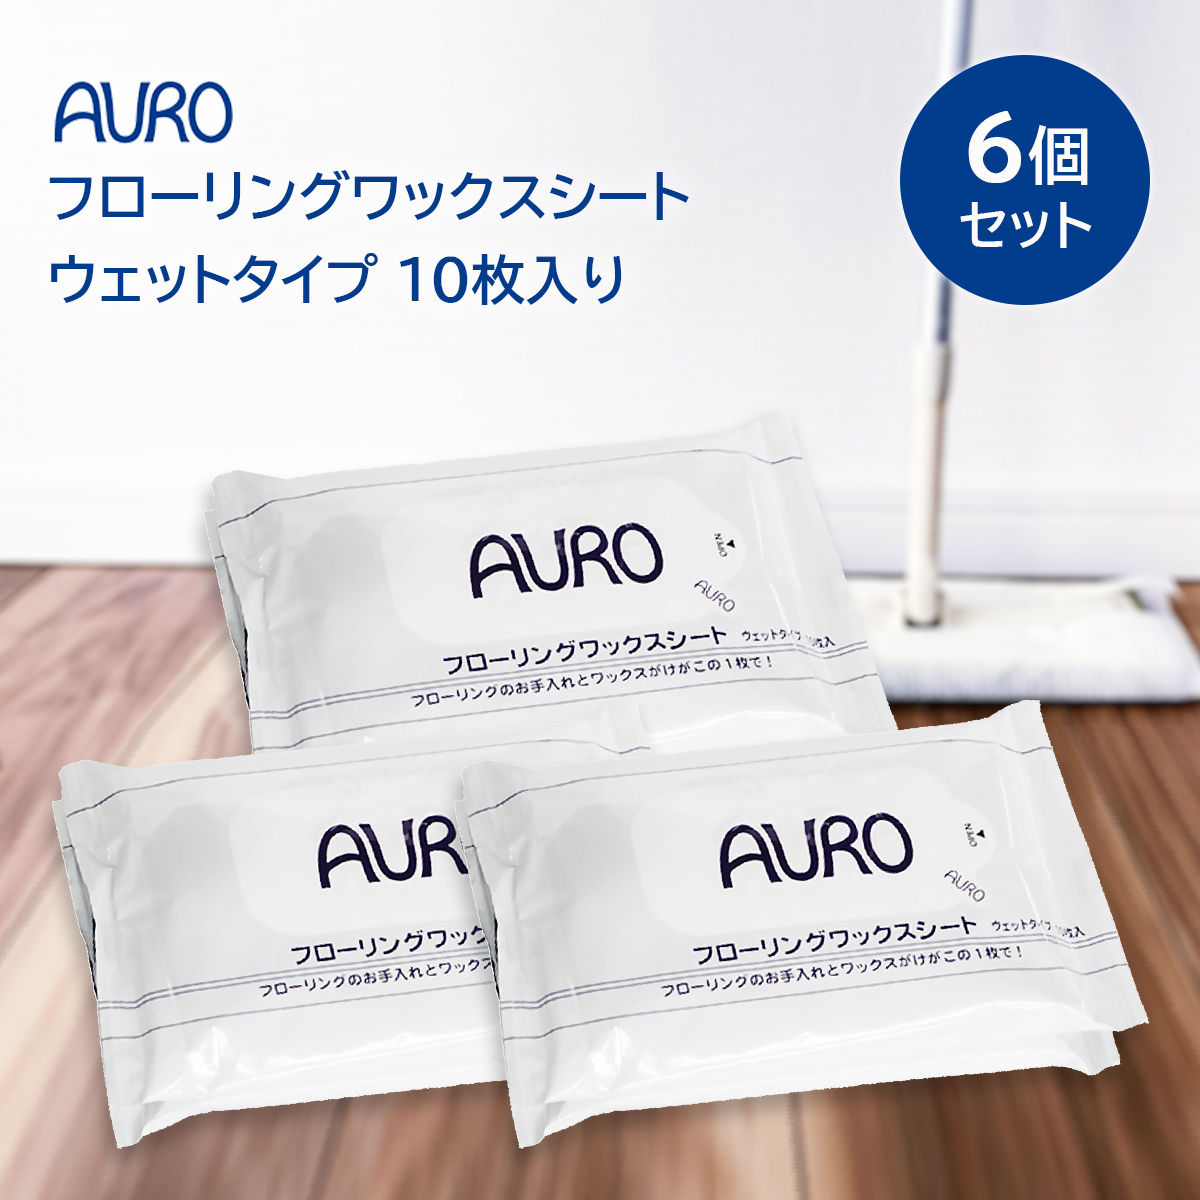 (AURO)auro flooring wax seat wet type 60 sheets insertion (10 sheets ×6 piece )